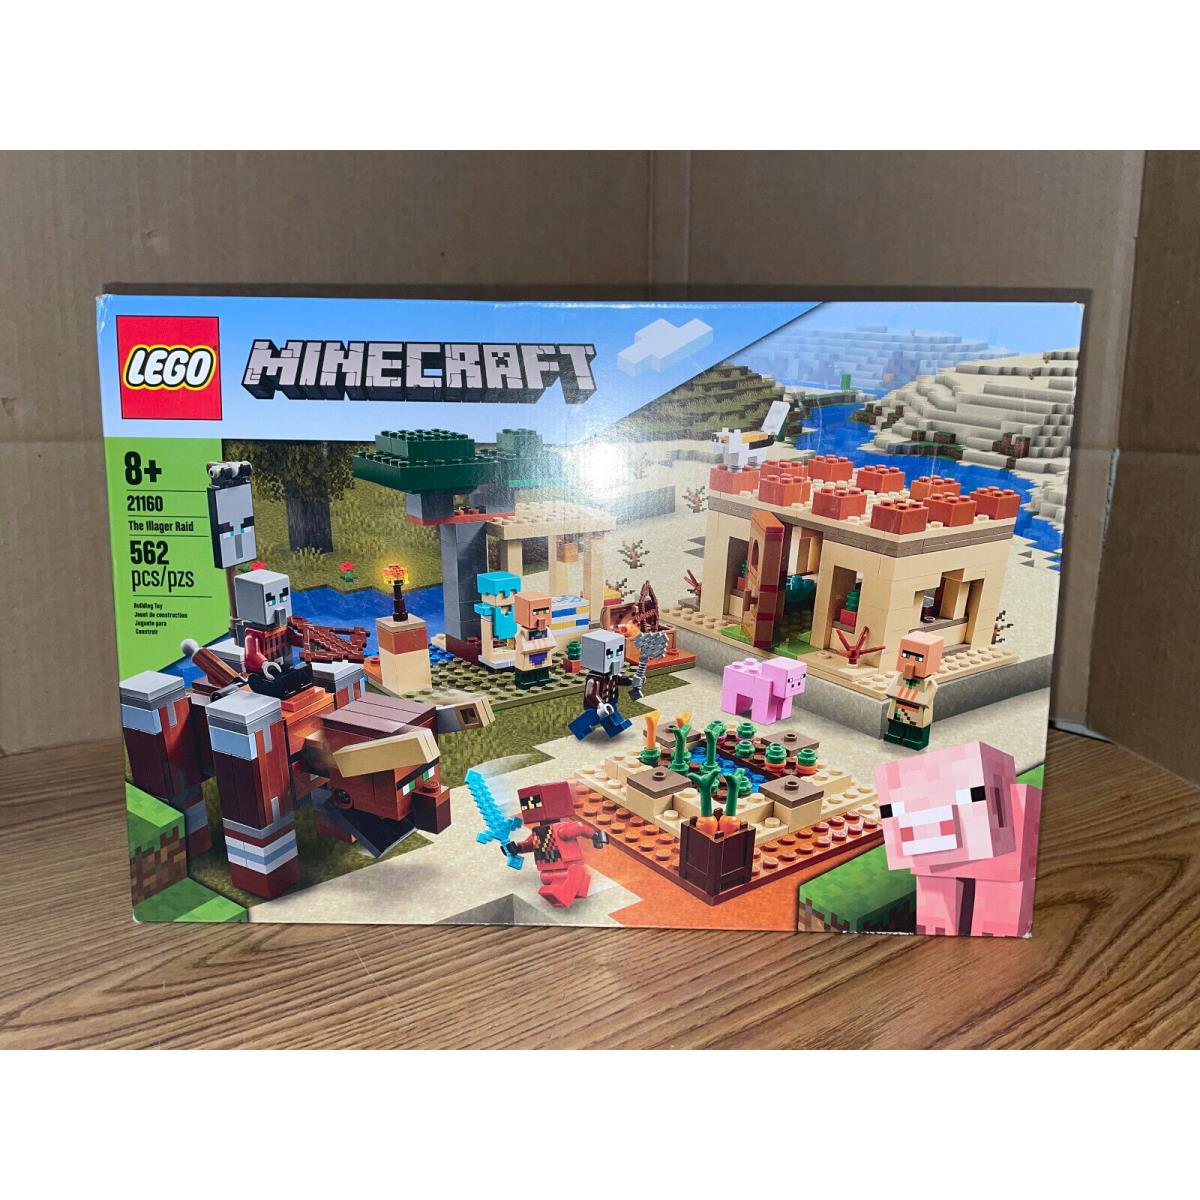 Lego 21160 Minecraft: The Illager Raid Retired Set 562 Pcs